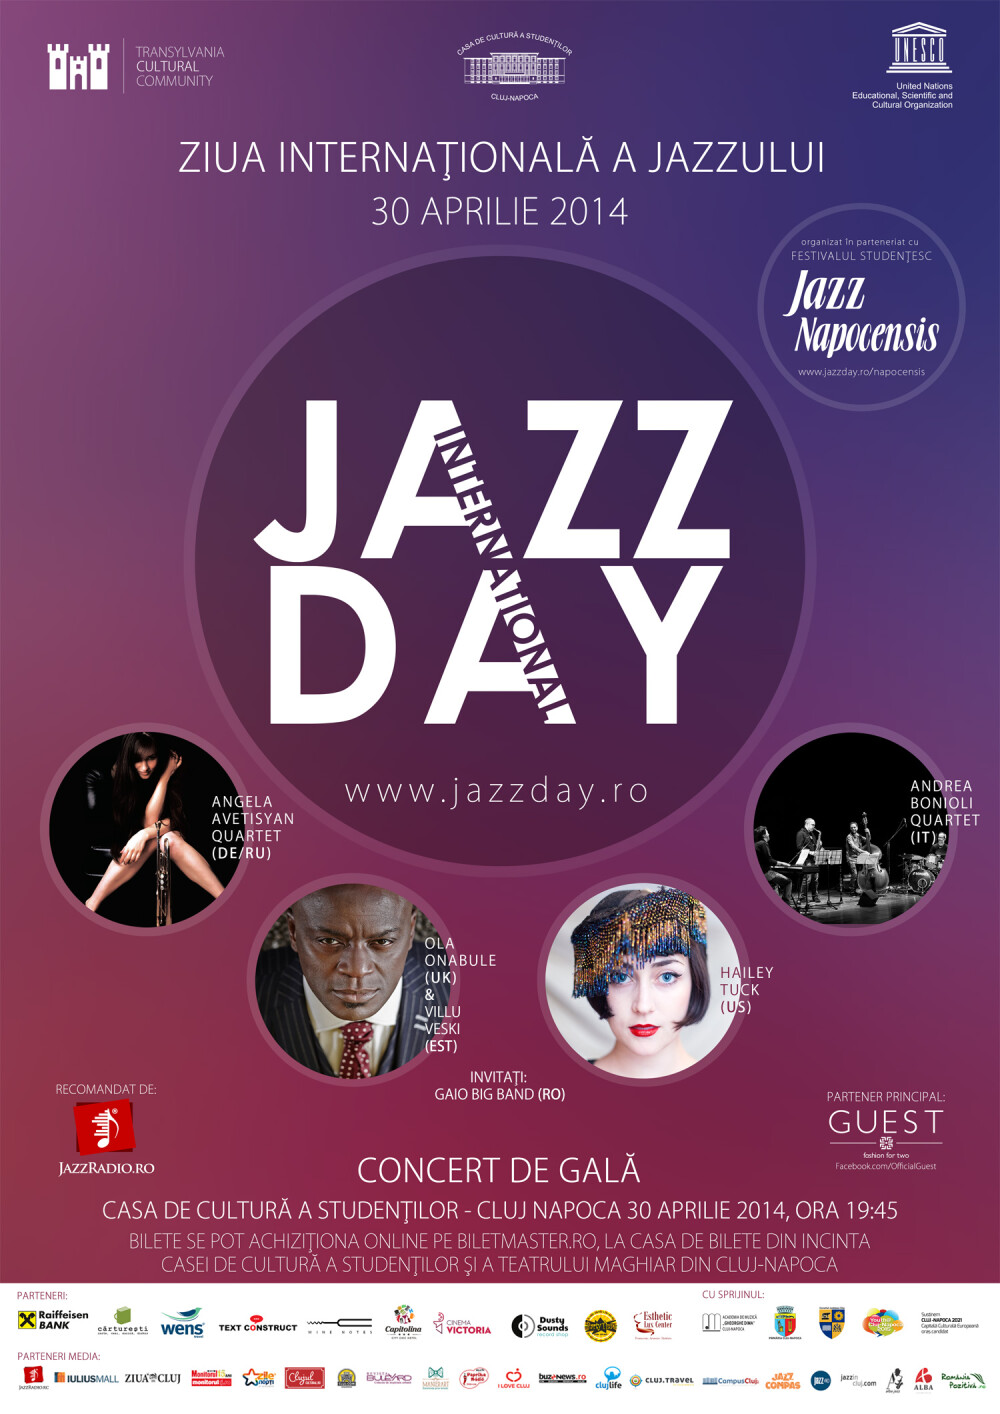 Ziua Internationala a Jazzului, sarbatorita la Cluj-Napoca - Imaginea 1